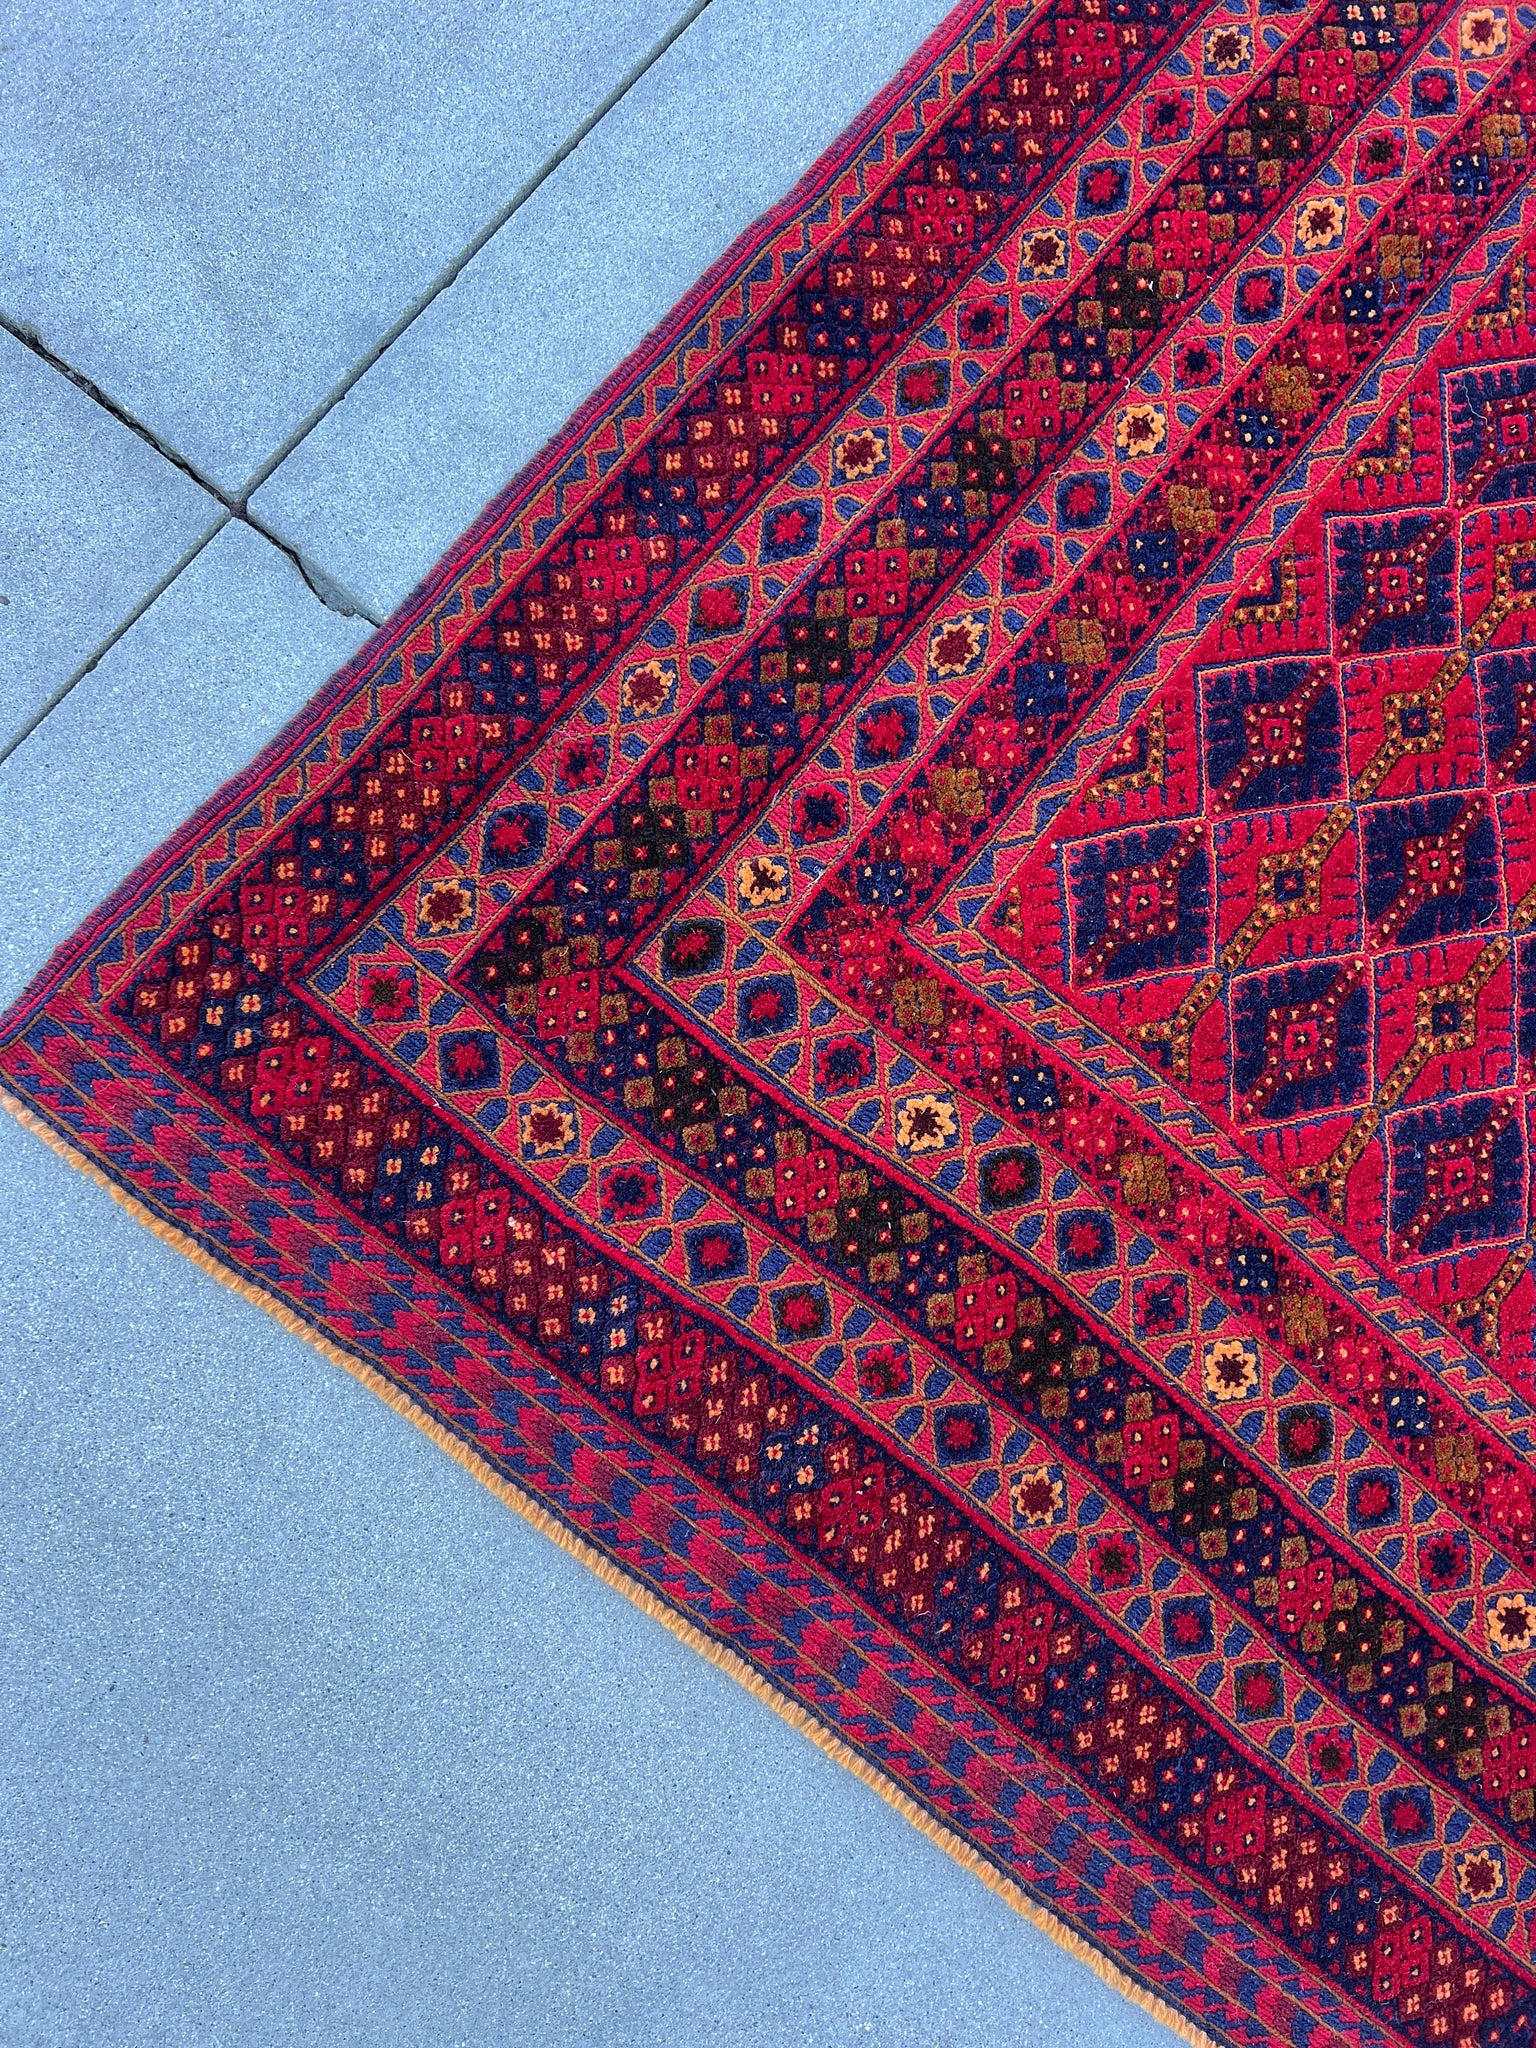 7x10 (210x322) Handmade Afghan Rug | Cherry Red Chocolate Brown Crimson Red Black Blush Pink | Mishawani Kilim Barjasta Knotted Wool Boho